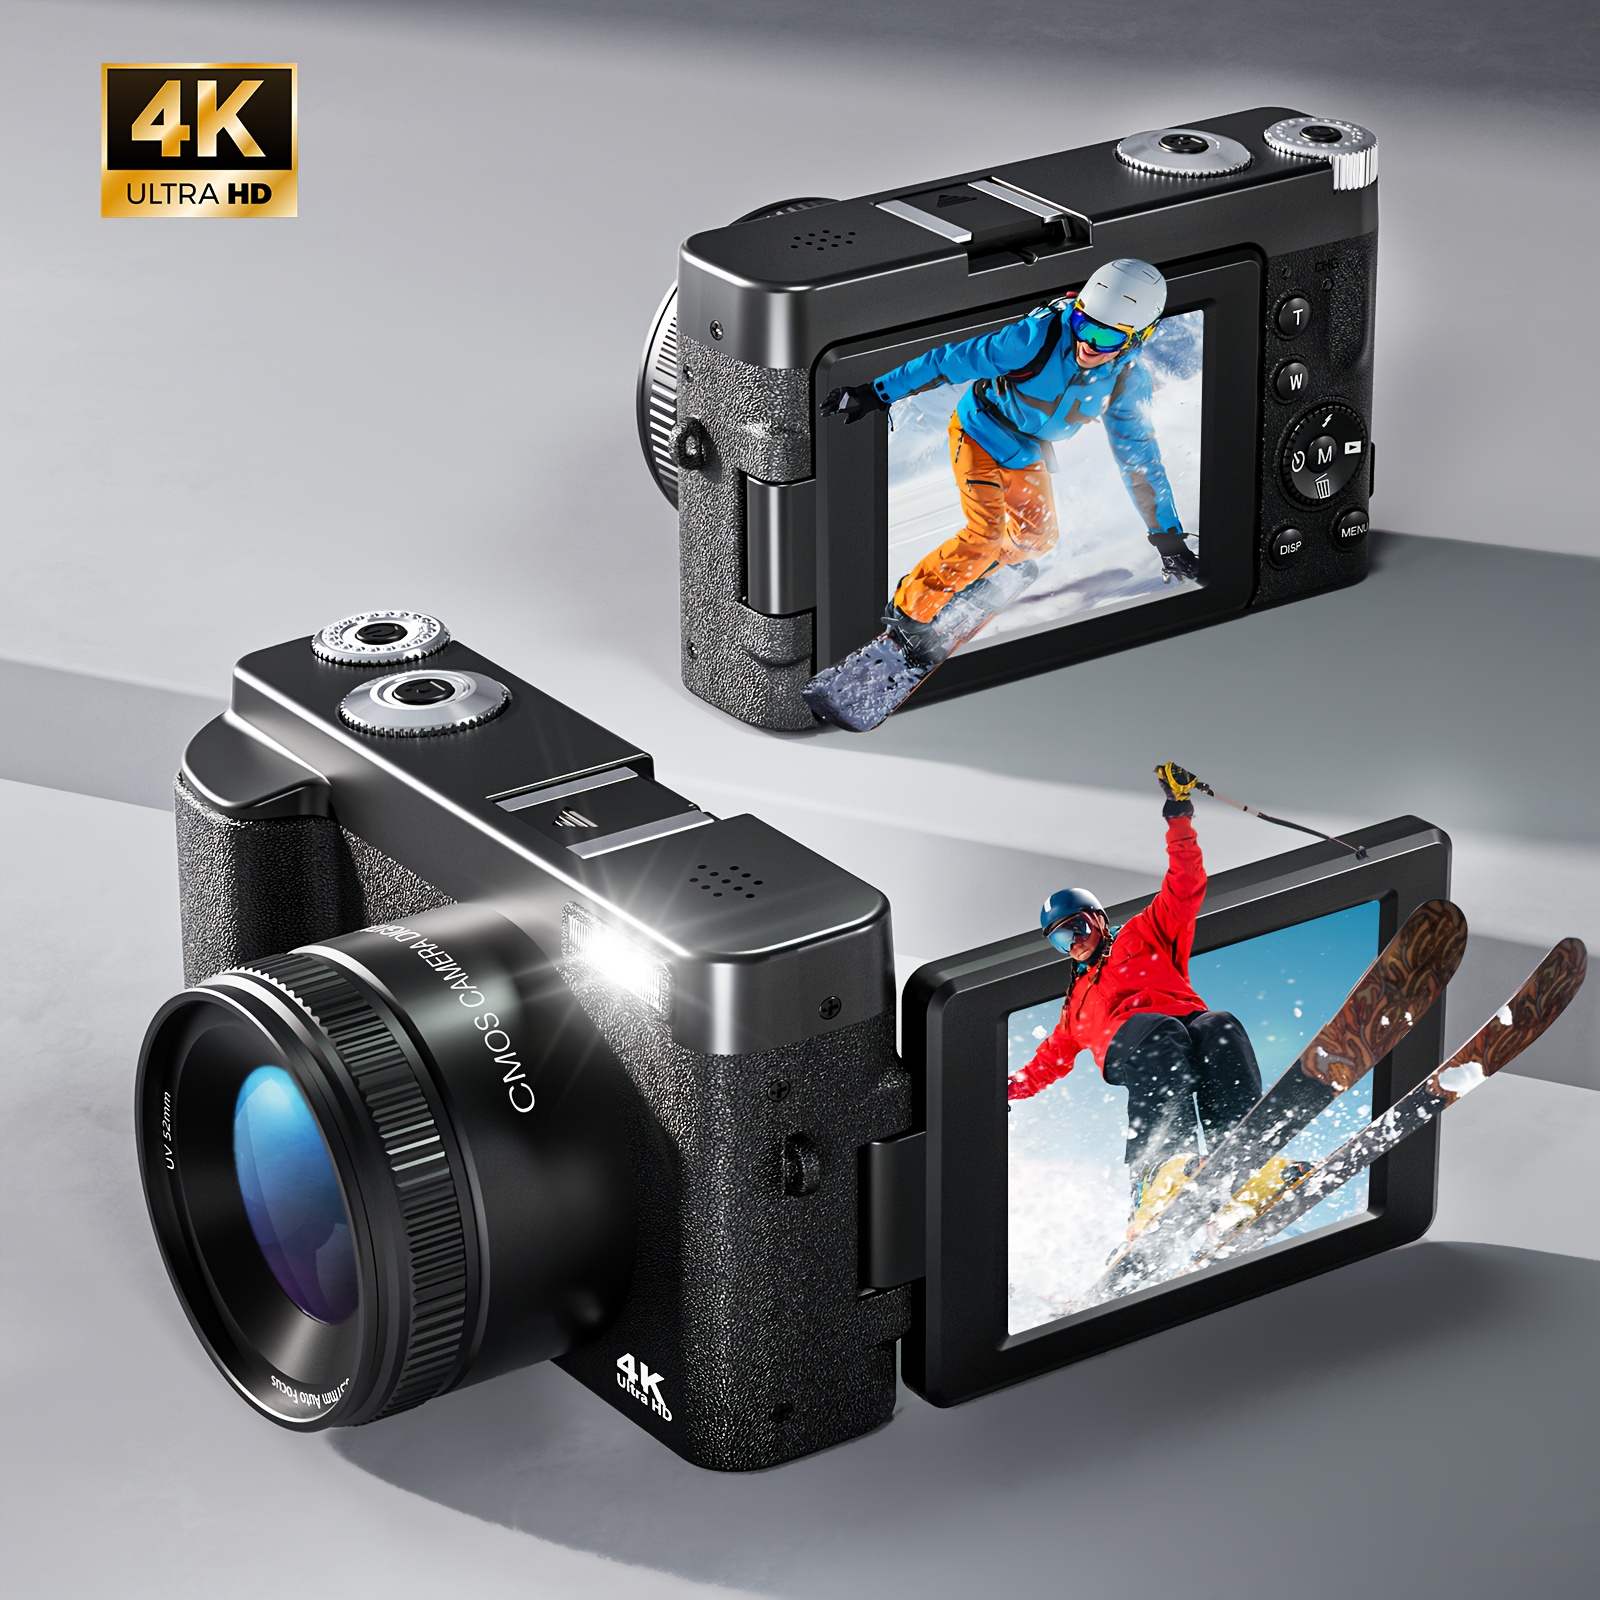  Cámara de video 4K HD Auto Focus Videocámara 48MP